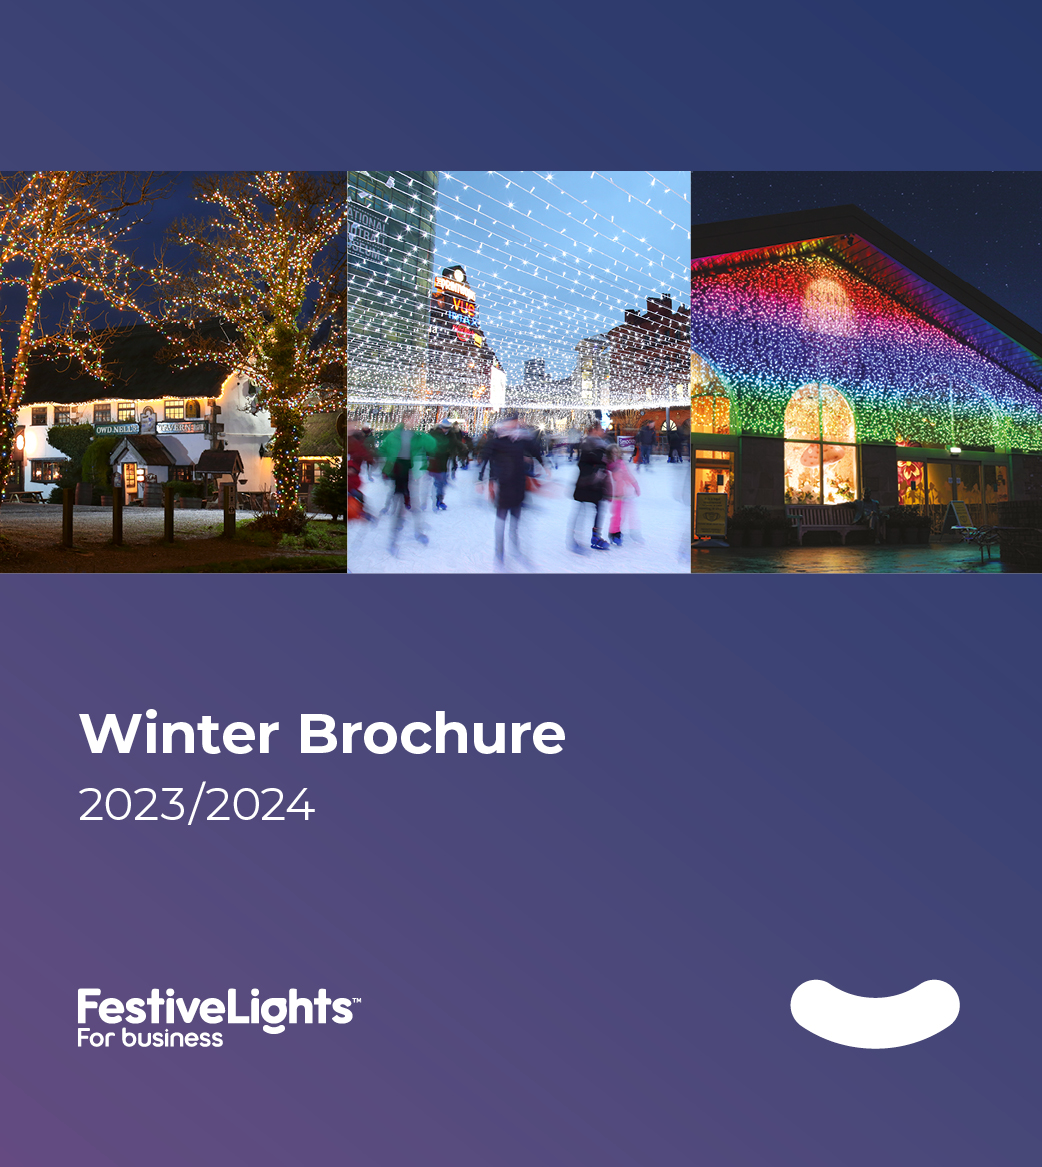 Festive Lights Winter Brochure 2023/2024